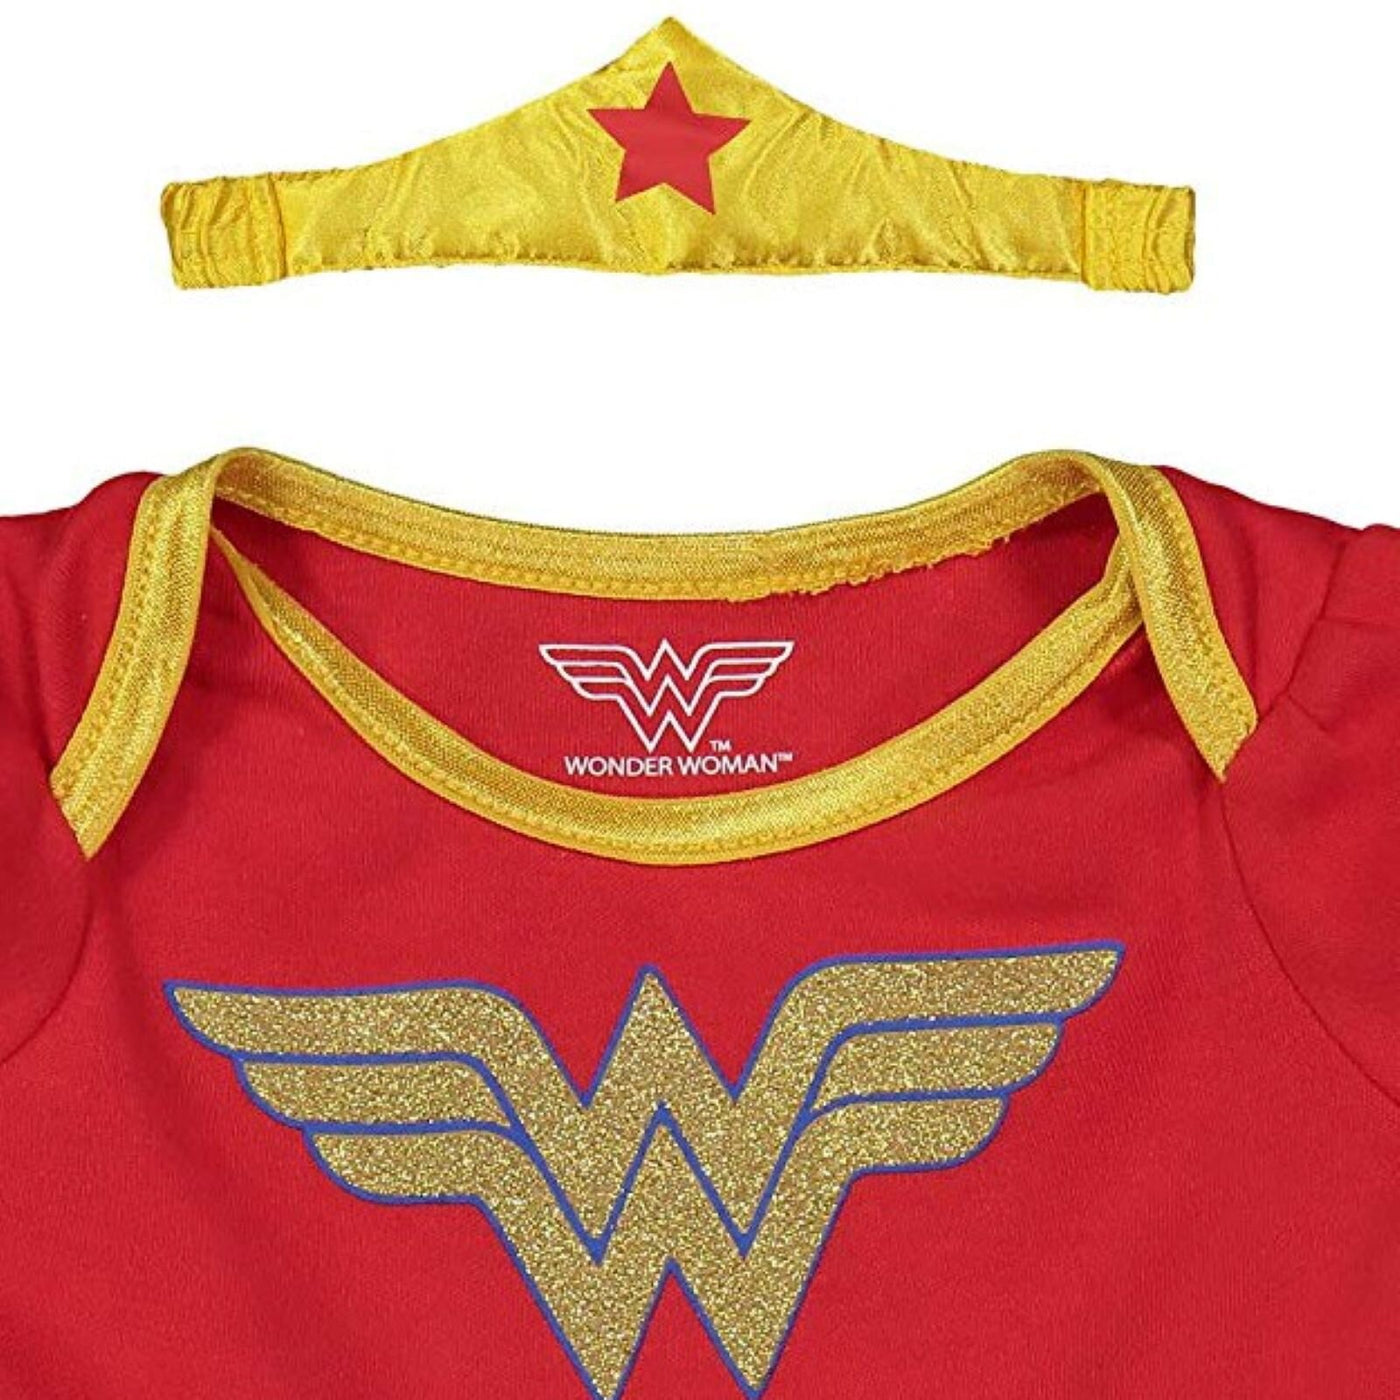 Warner Bros. Justice League Wonder Woman Costume Bodysuit Dress Cape and Headband 3 Piece Set